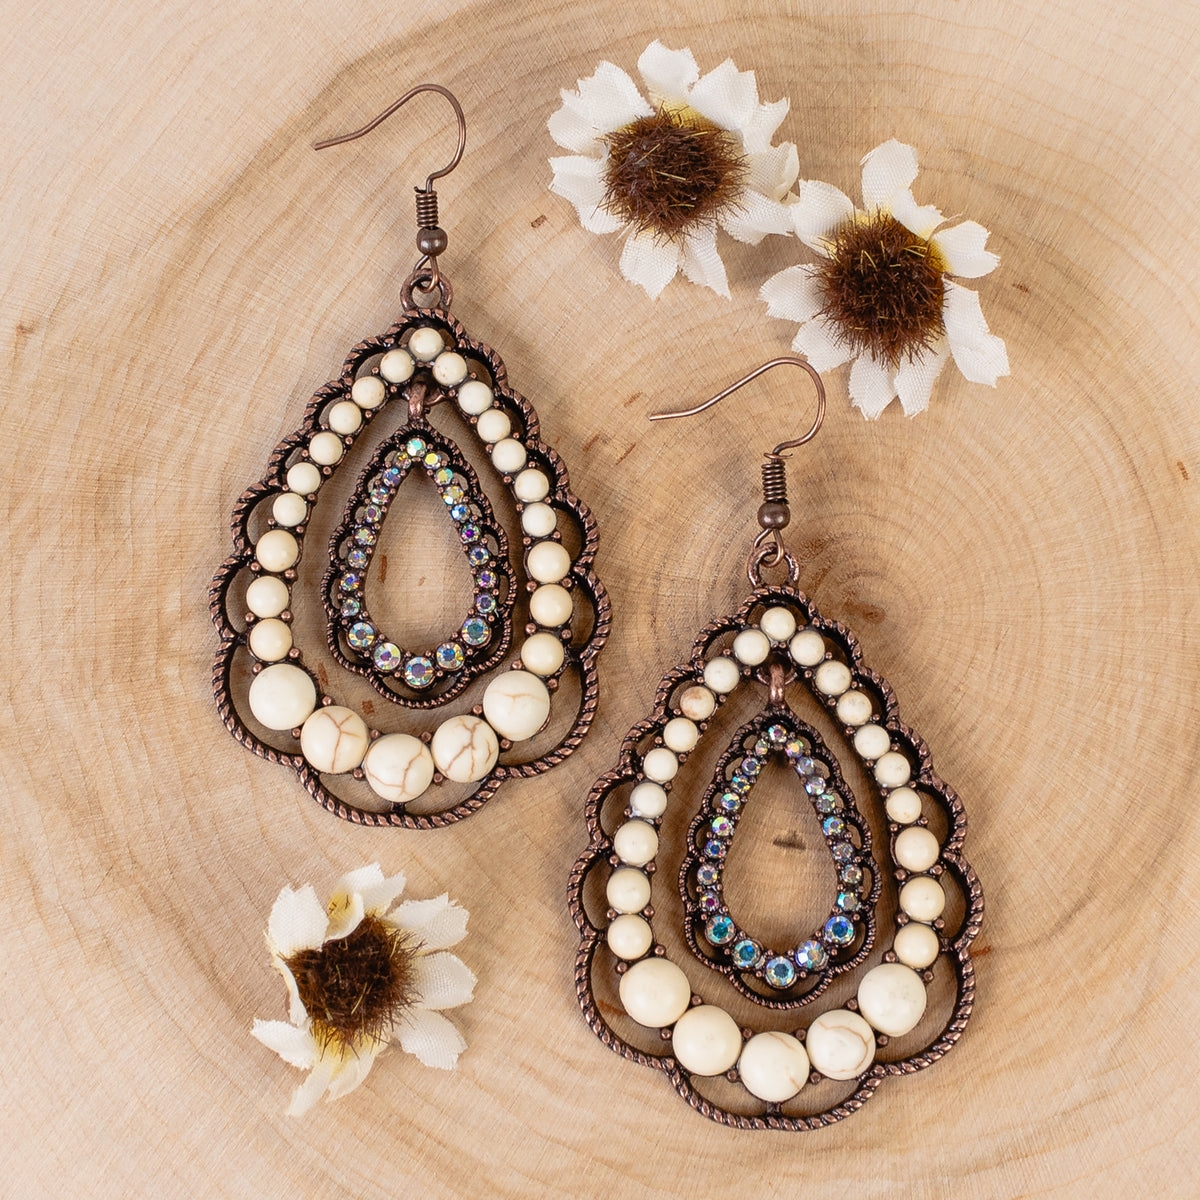 93235 - Crystal Squash Blossom Earrings - Ivory & Copper